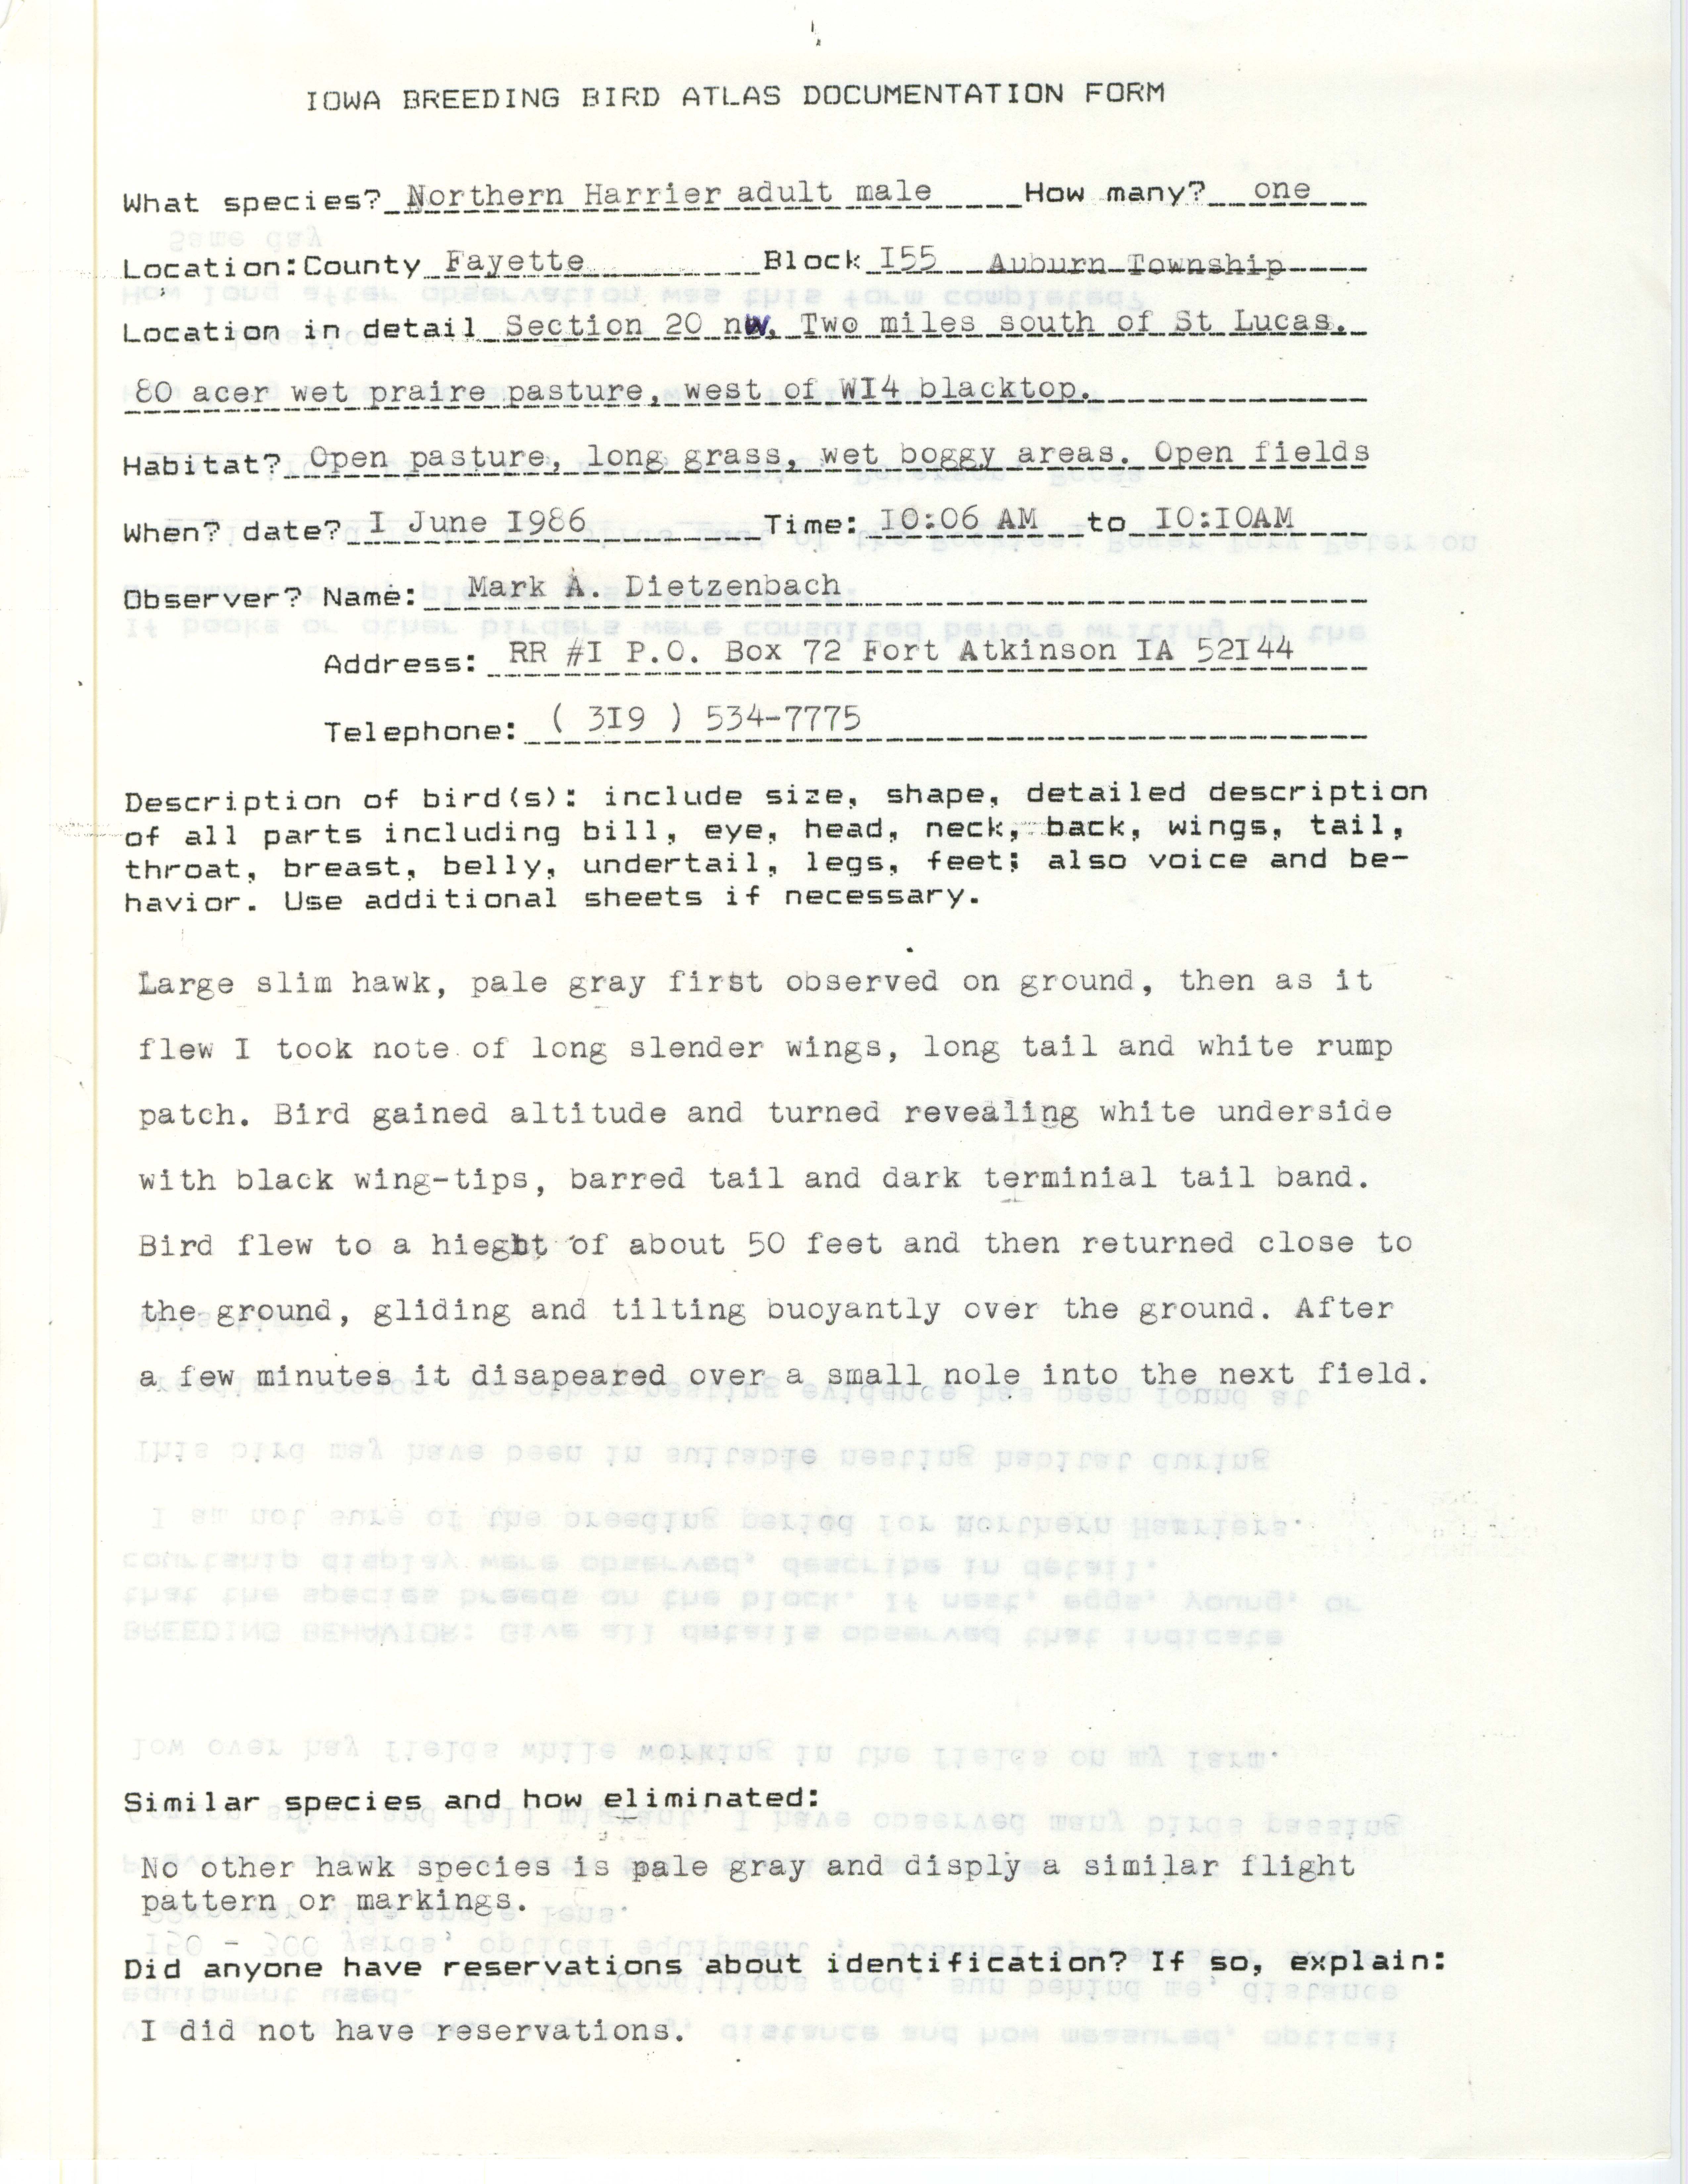 Iowa Breeding Bird Atlas documentation form, Mark A. Dietzenbach, June 1, 1986